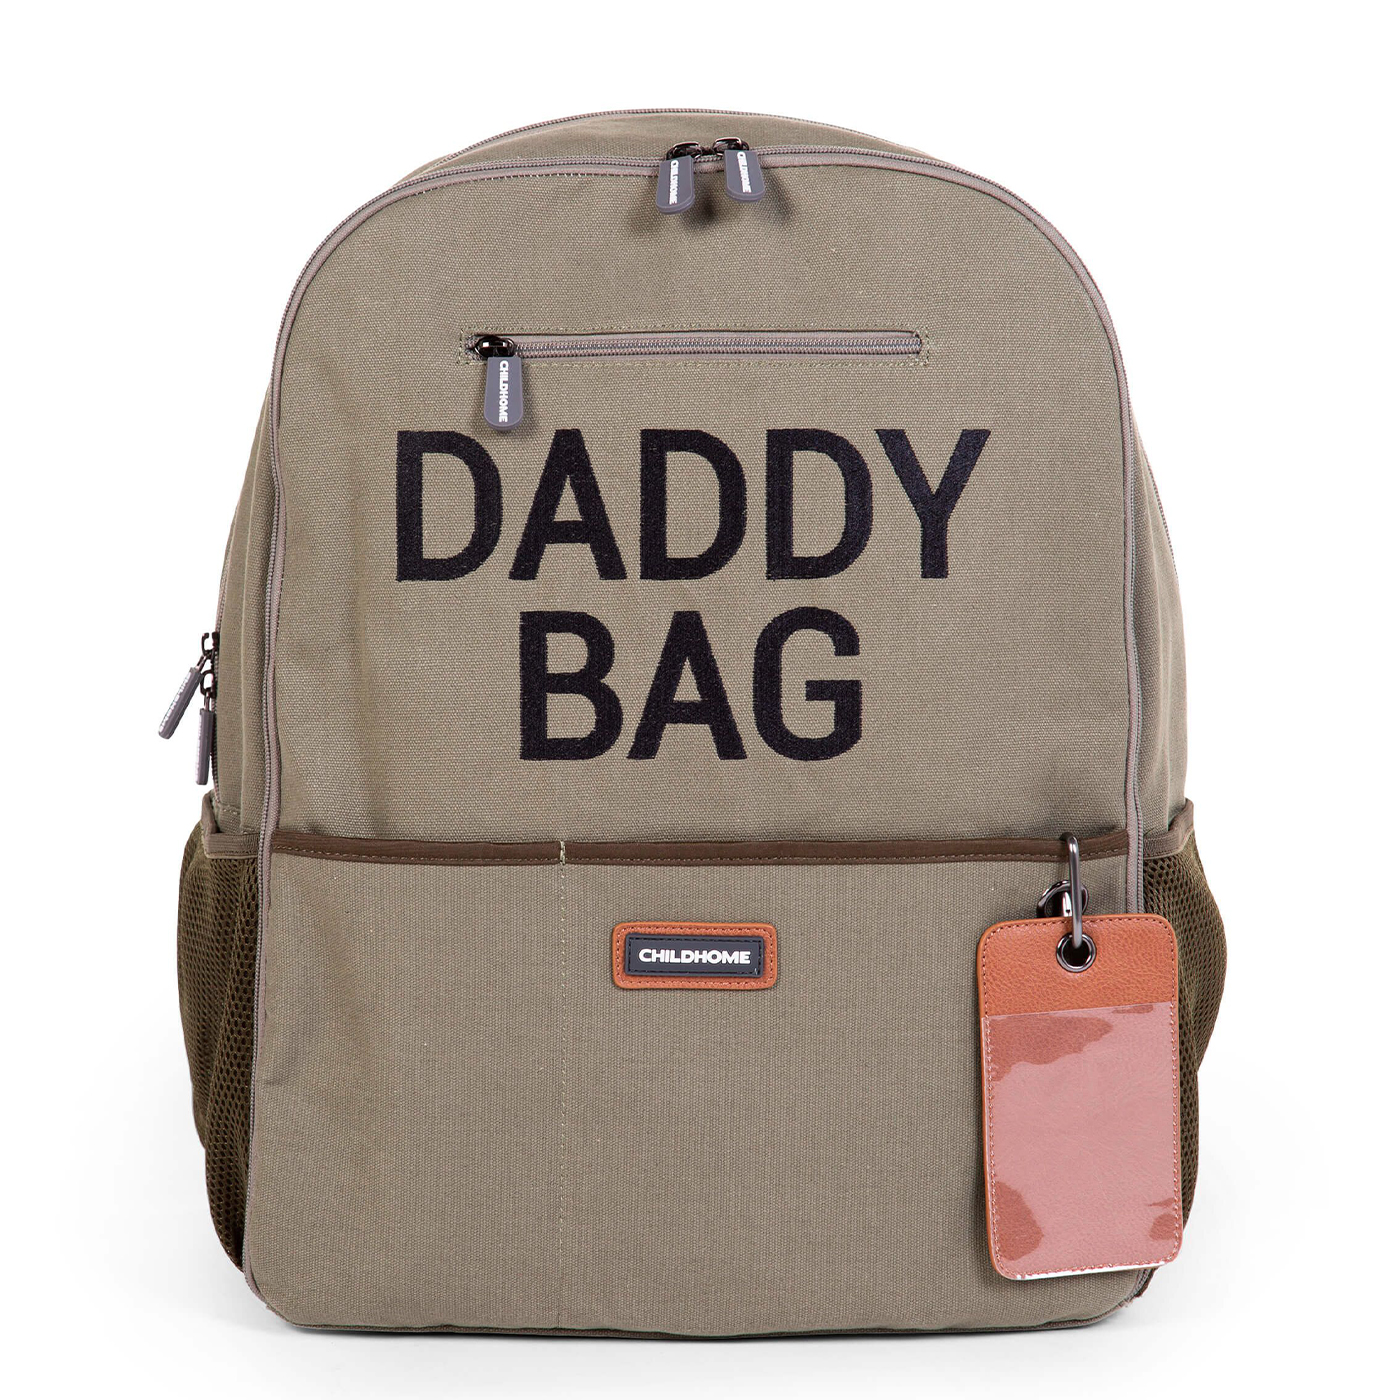  Childhome Daddy Bag Sırt Çantası  | Haki